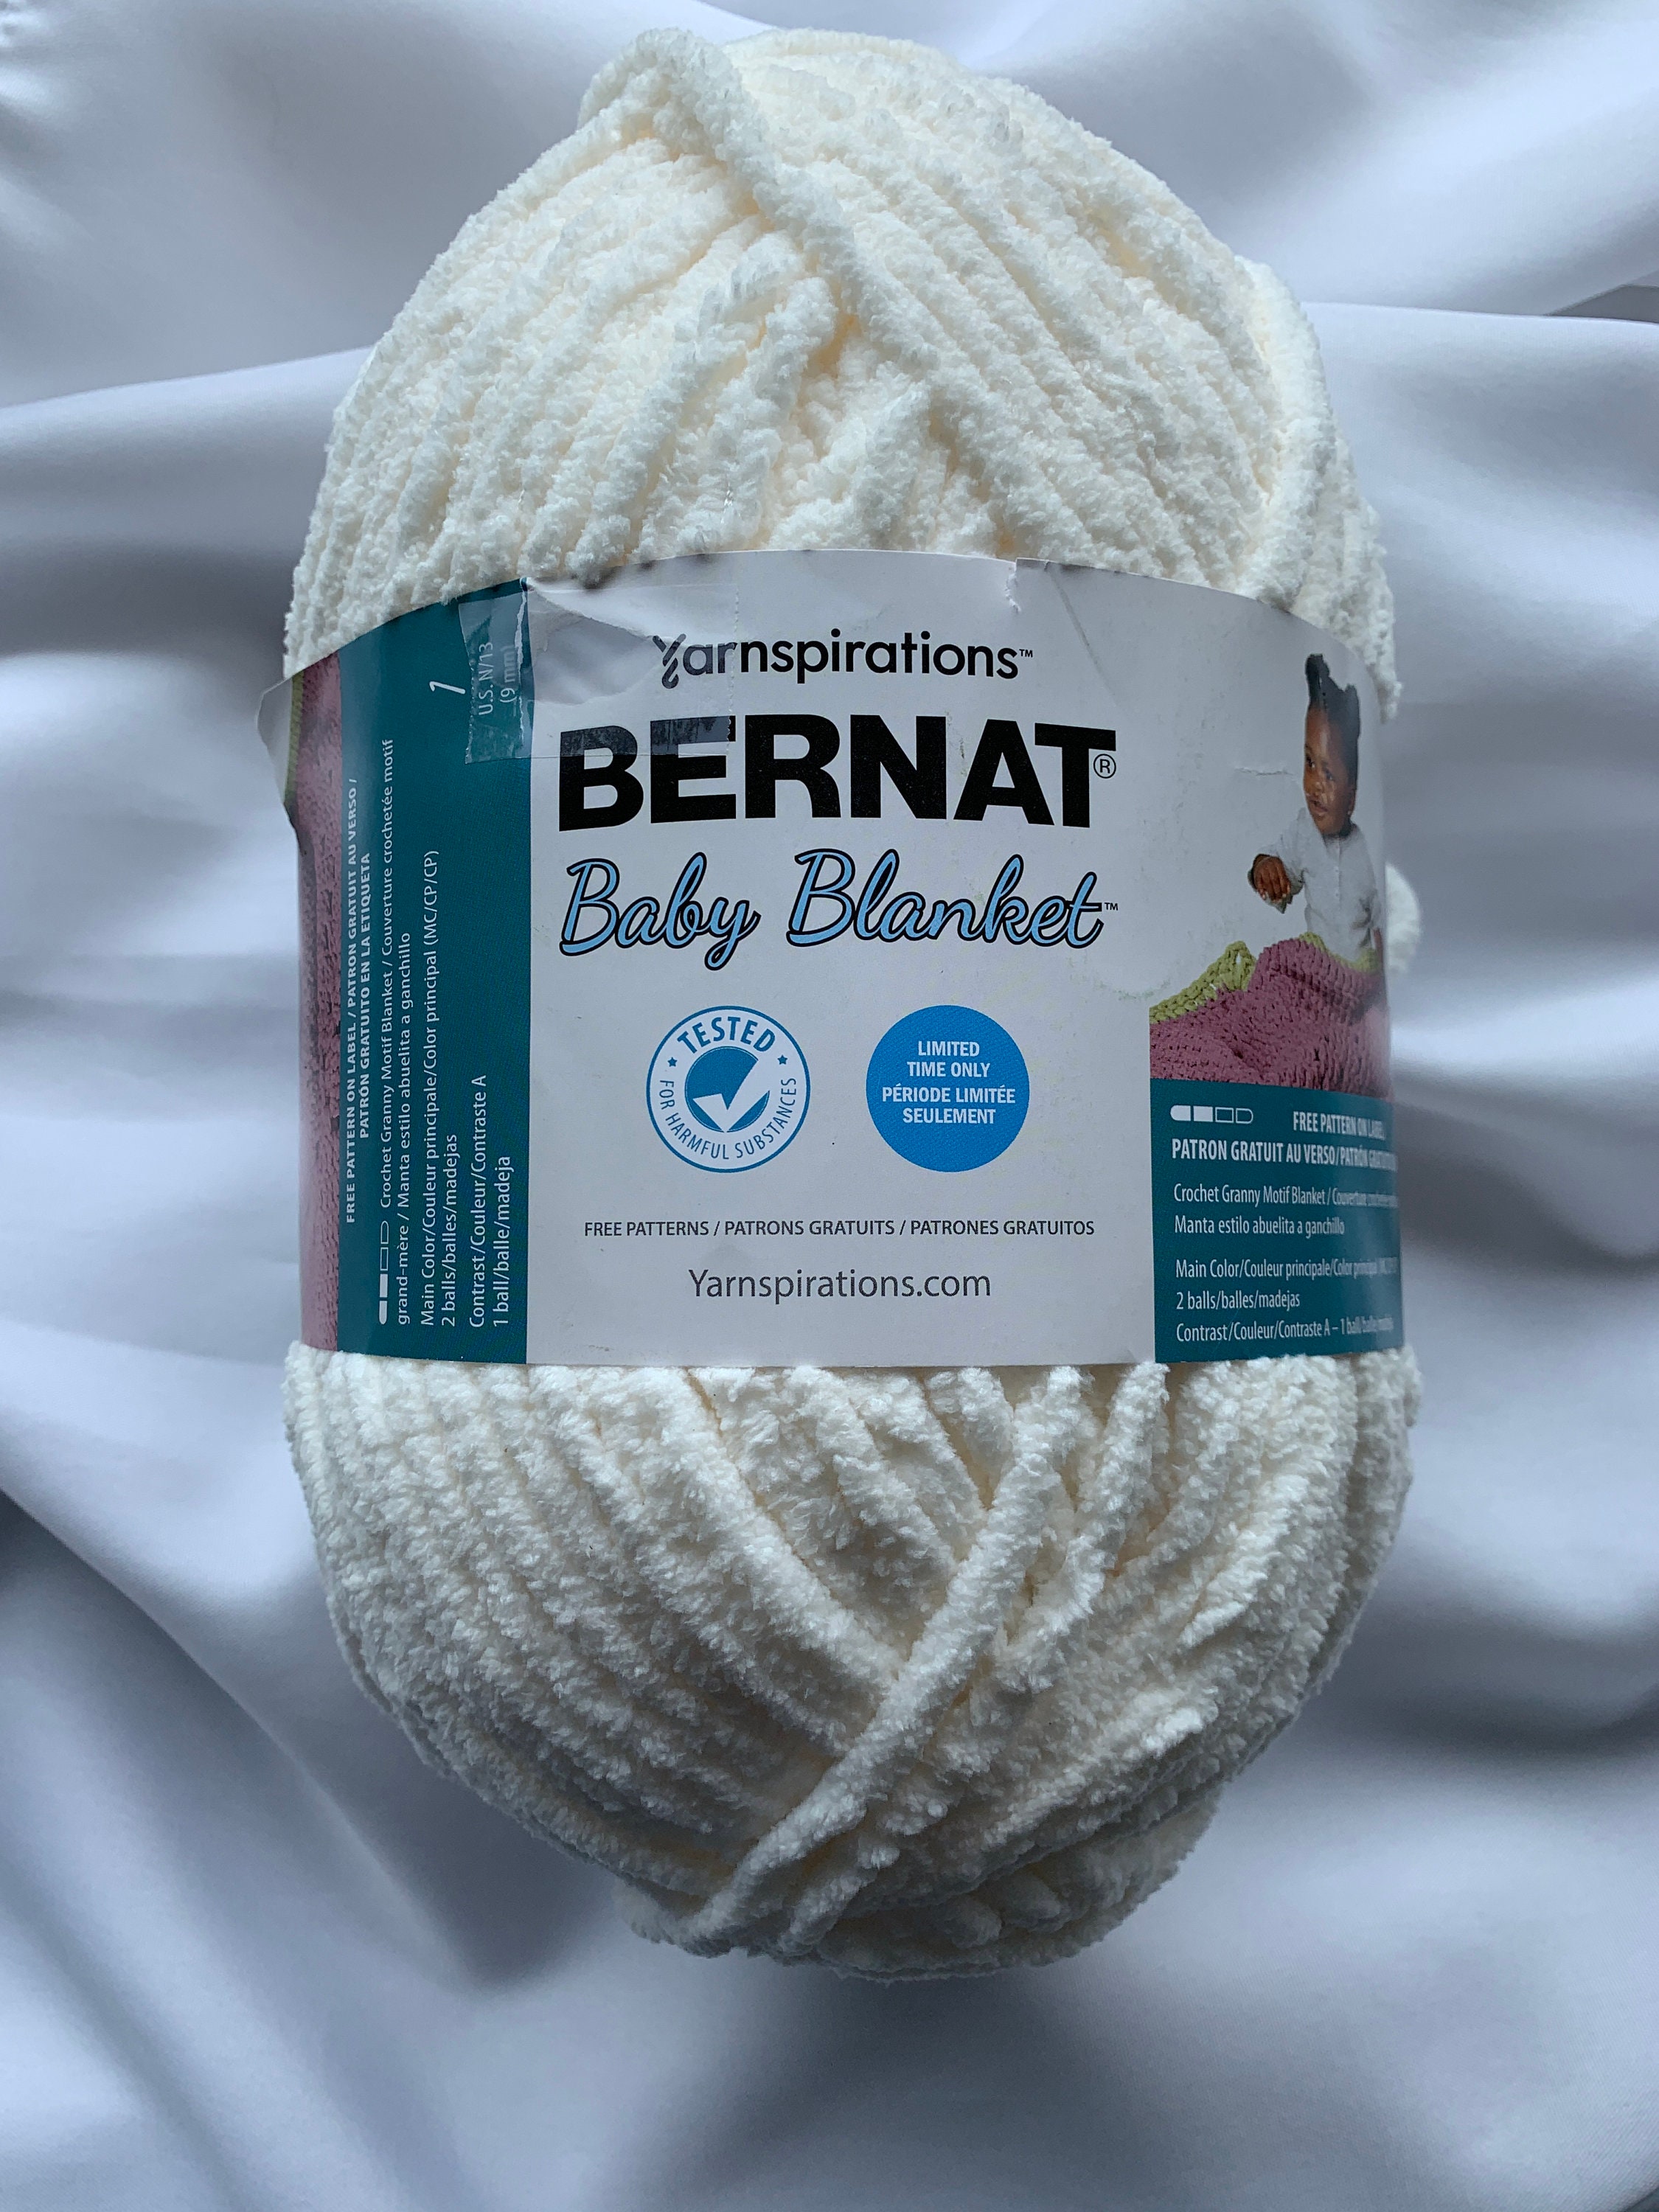 DEEP SEA 10920 Bernat Blanket Yarn 220yds 10.5 Oz Skein Super Bulky 6  Chenille Winter Warm Yarn Crochet Knit Dcoyshouseofyarn 